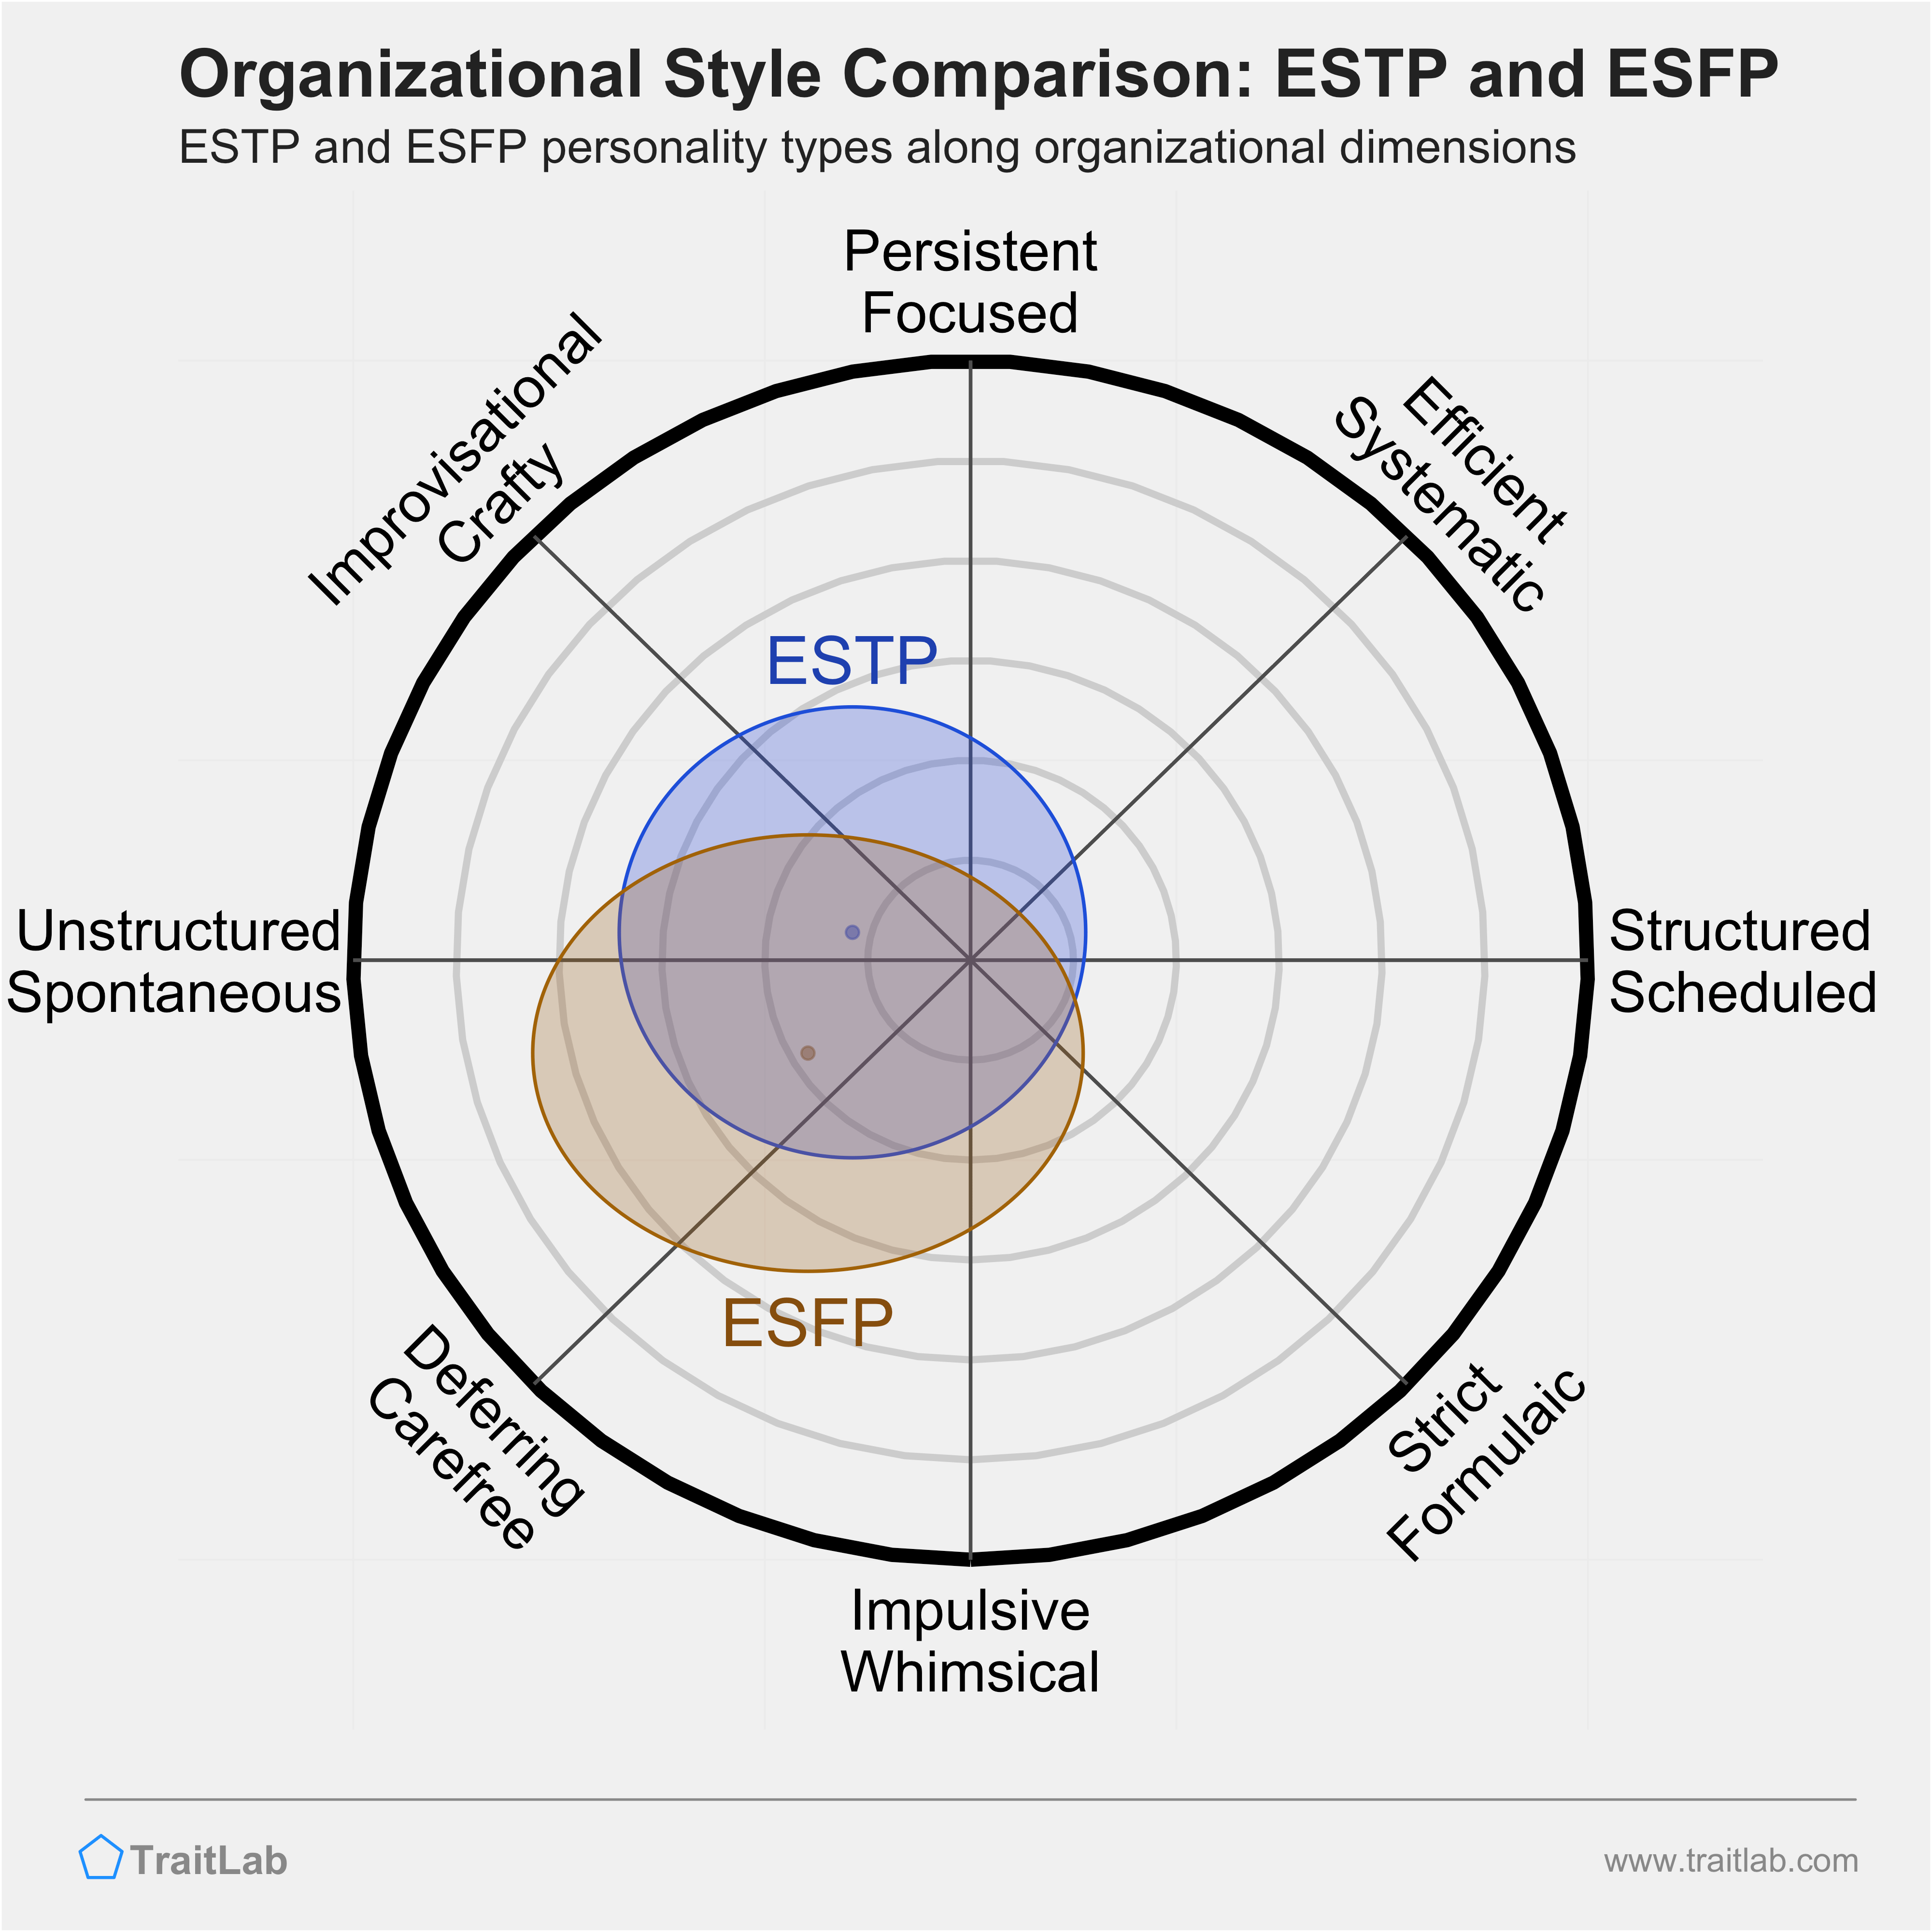 ESTP and ESFP comparison across organizational dimensions